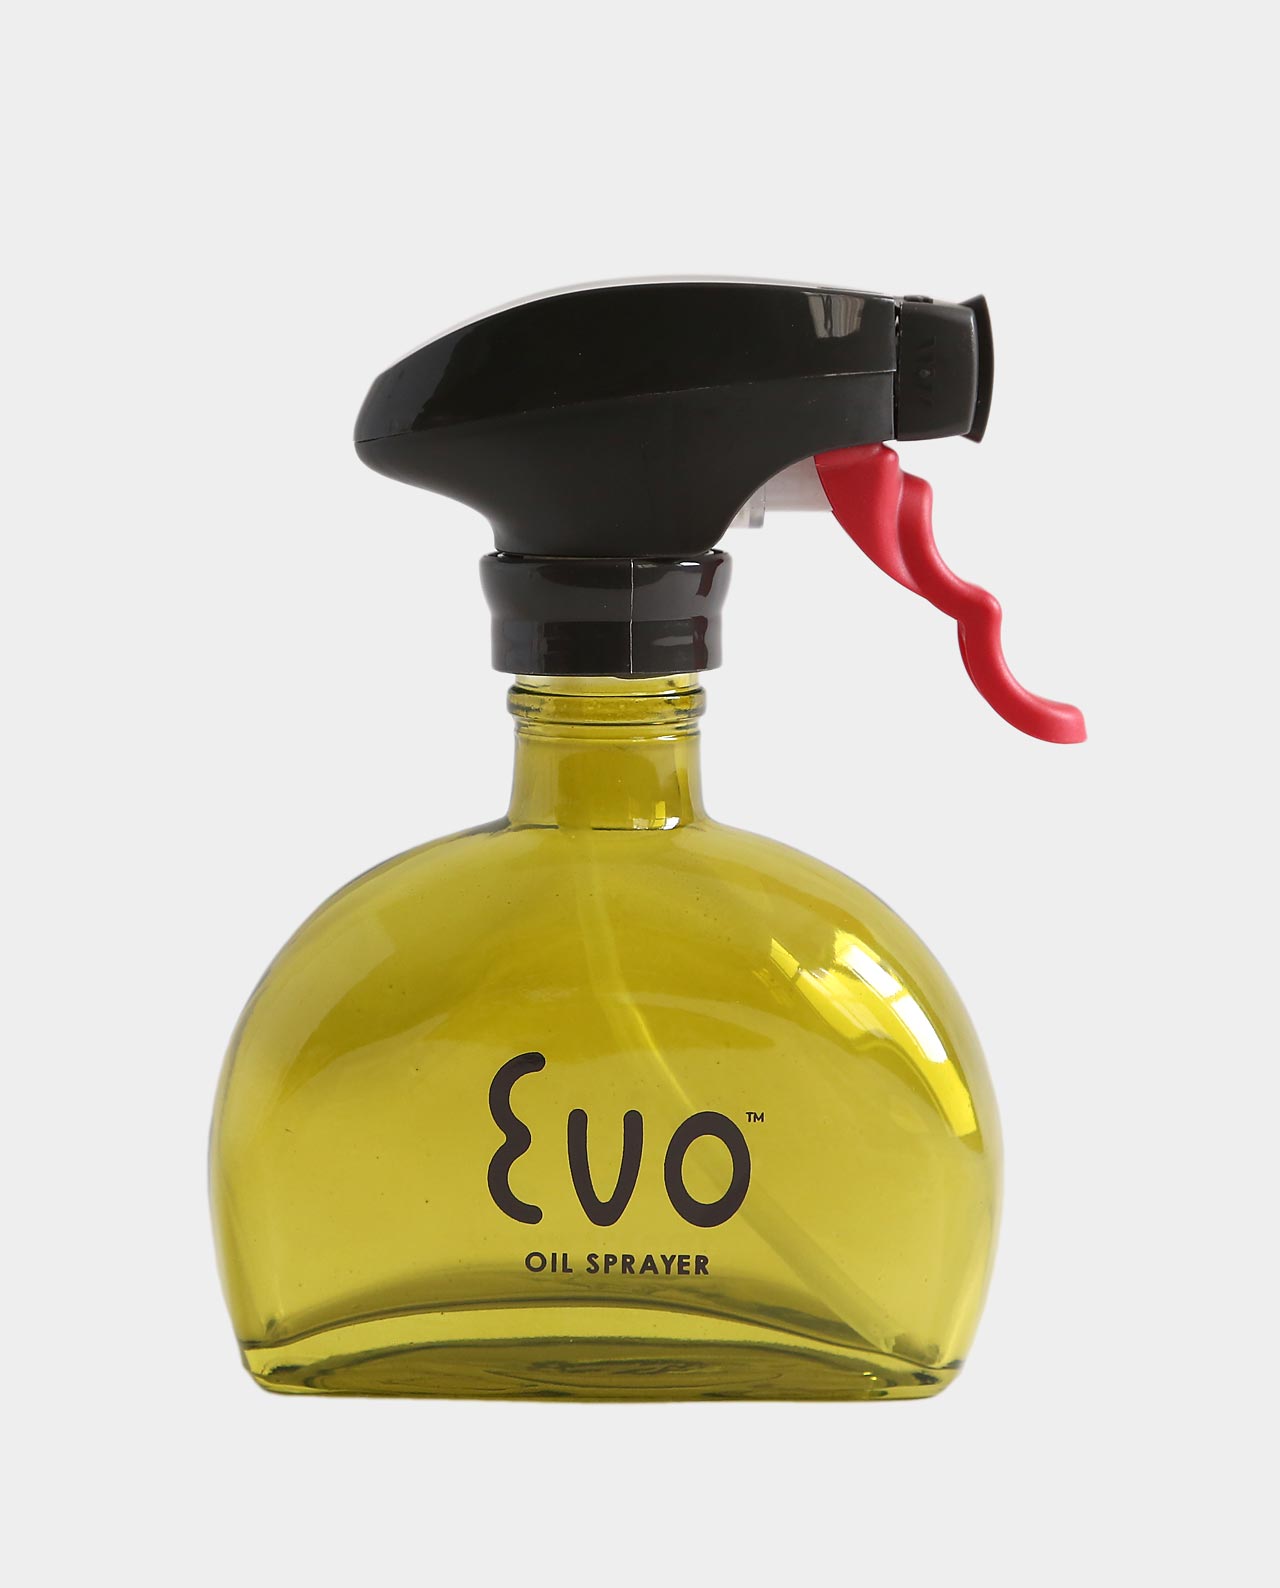 Evo Reusable Oil Sprayer Review